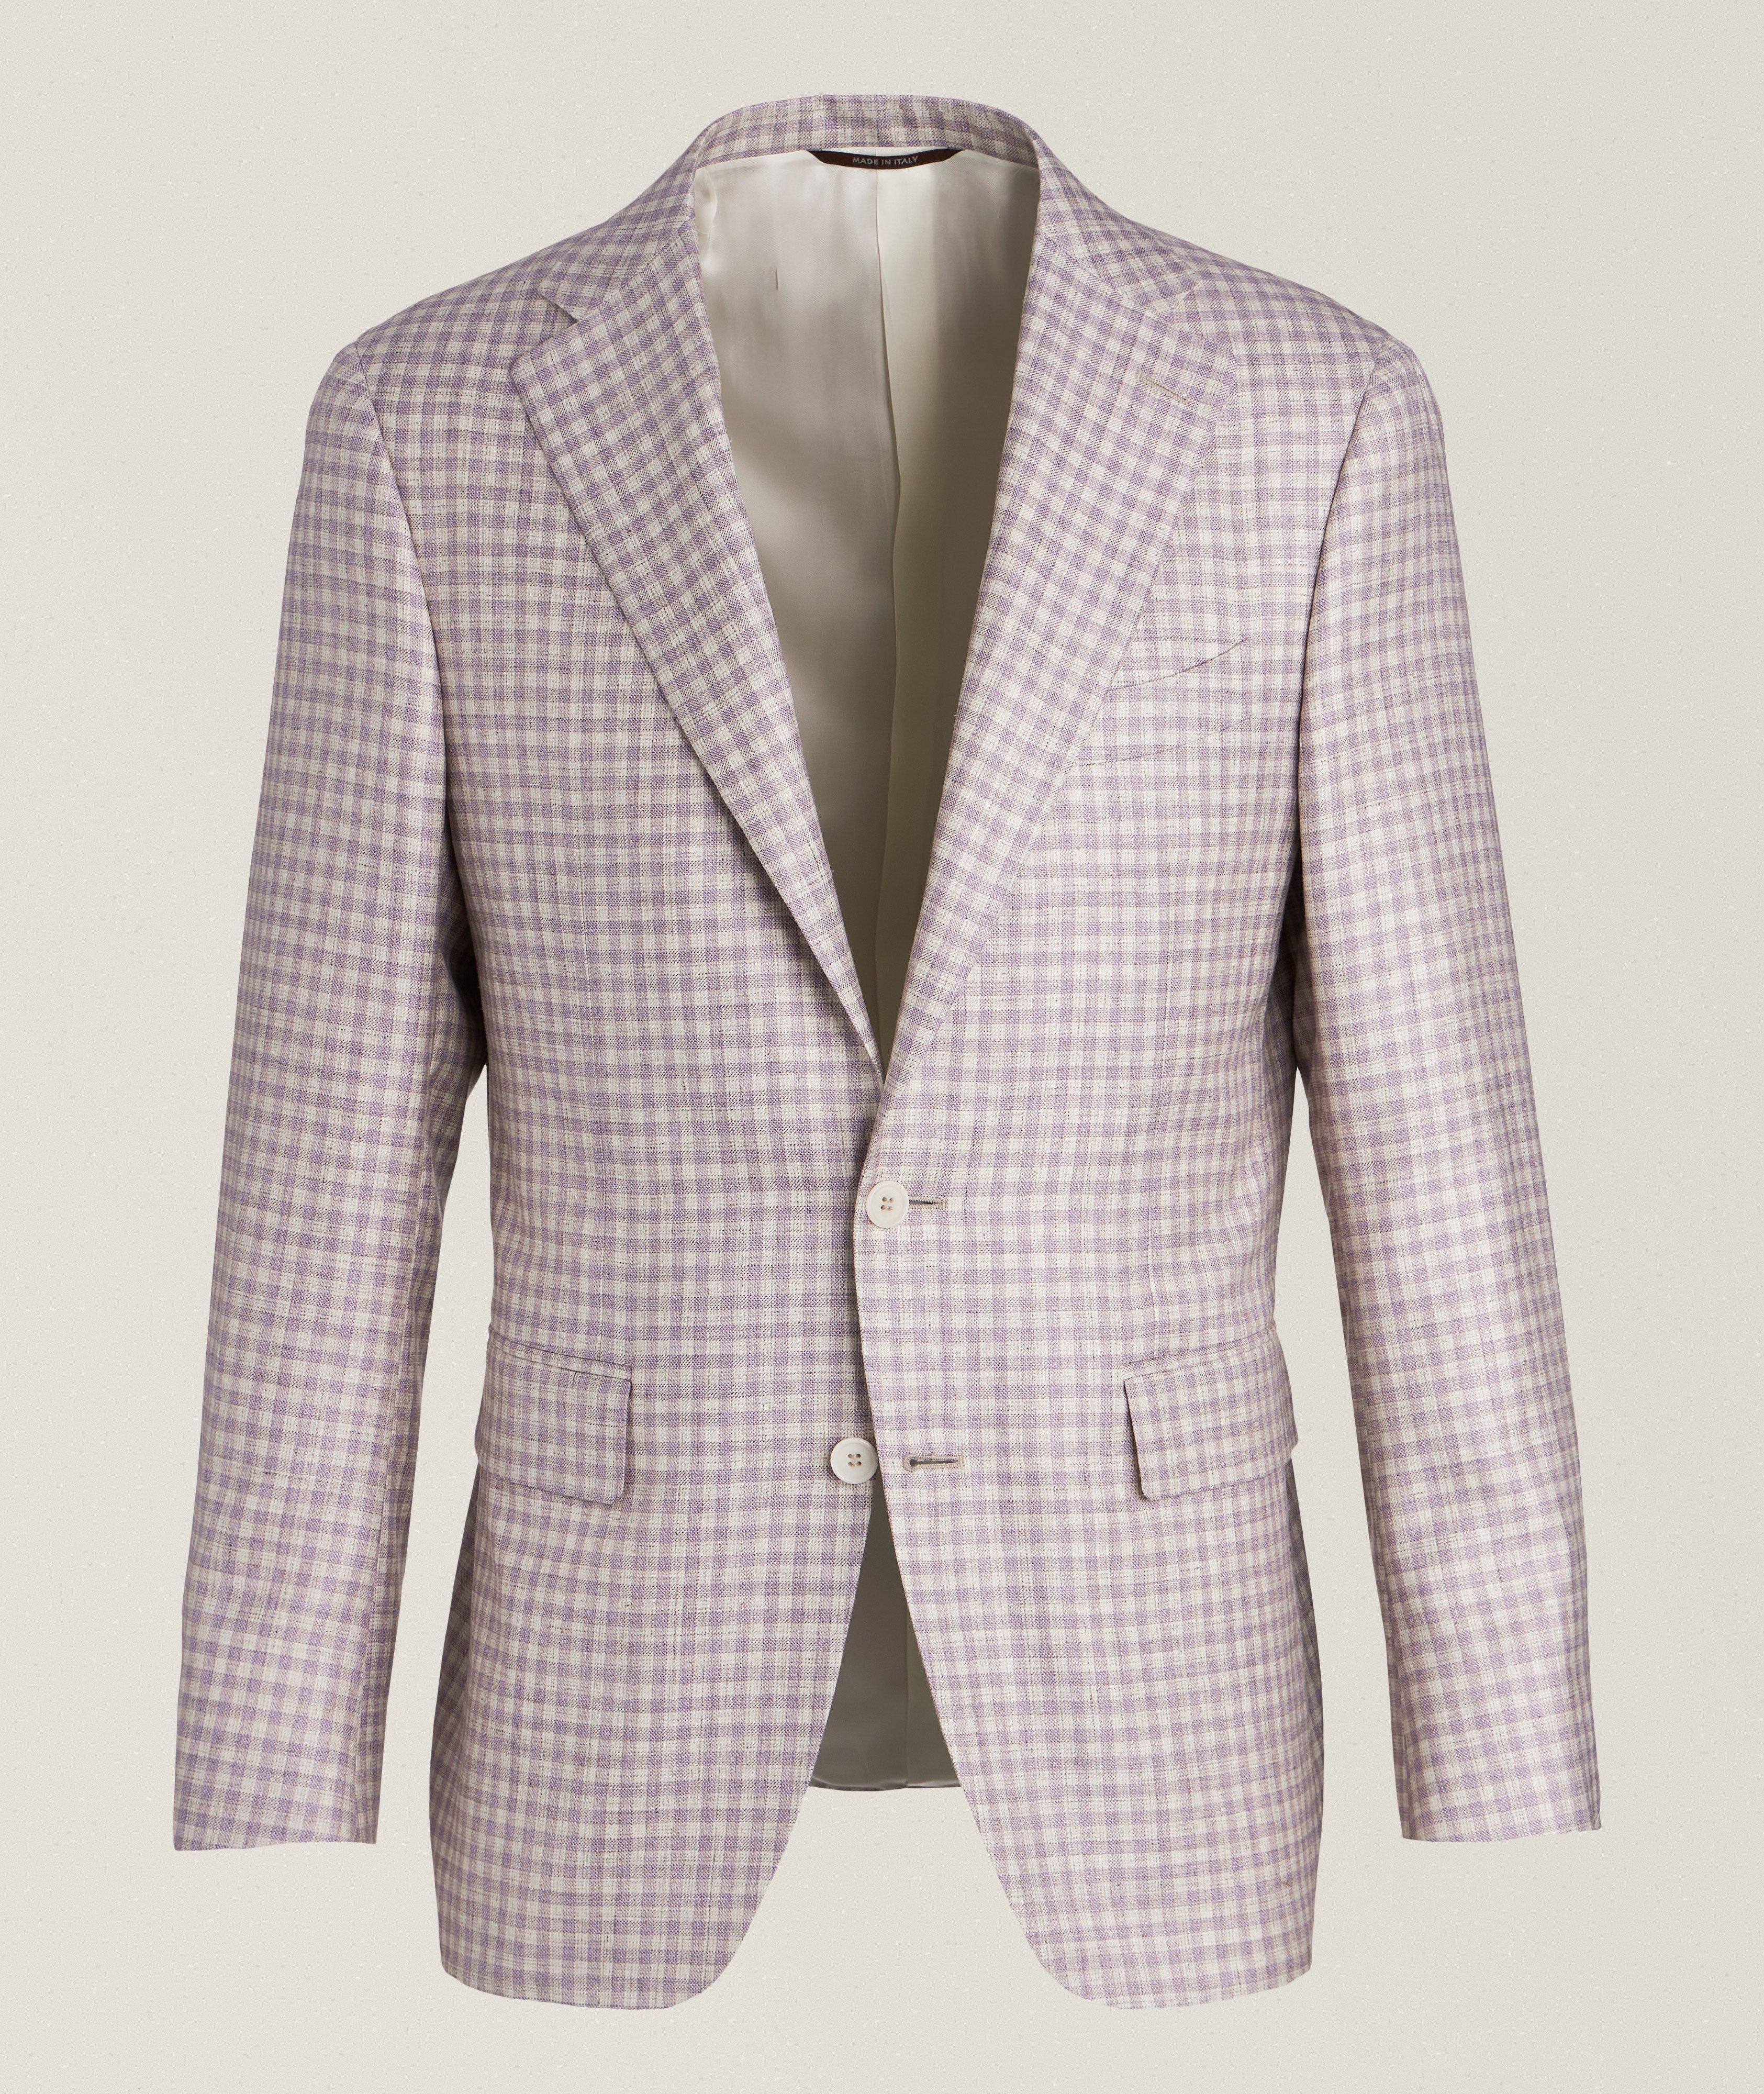 Canali Gingham Wool, Silk & Linen Sport Jacket